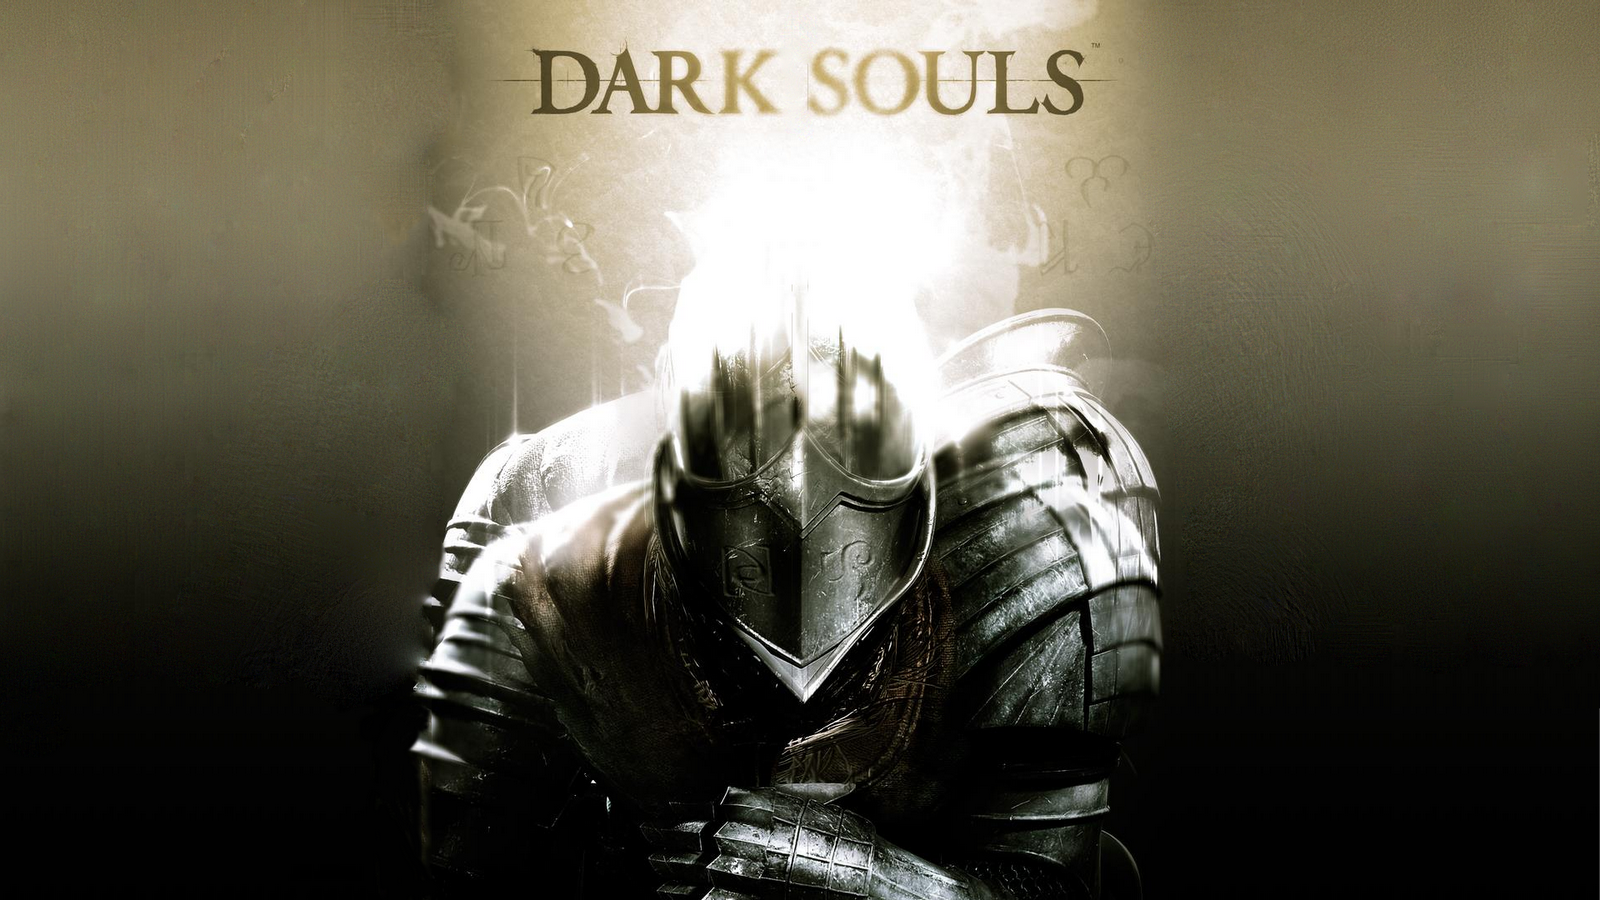 Free download wallpapers de dark souls en hd dark souls es un juego para  ps3 lleno [1600x900] for your Desktop, Mobile & Tablet | Explore 47+ Dark  Souls III Wallpaper | Dark